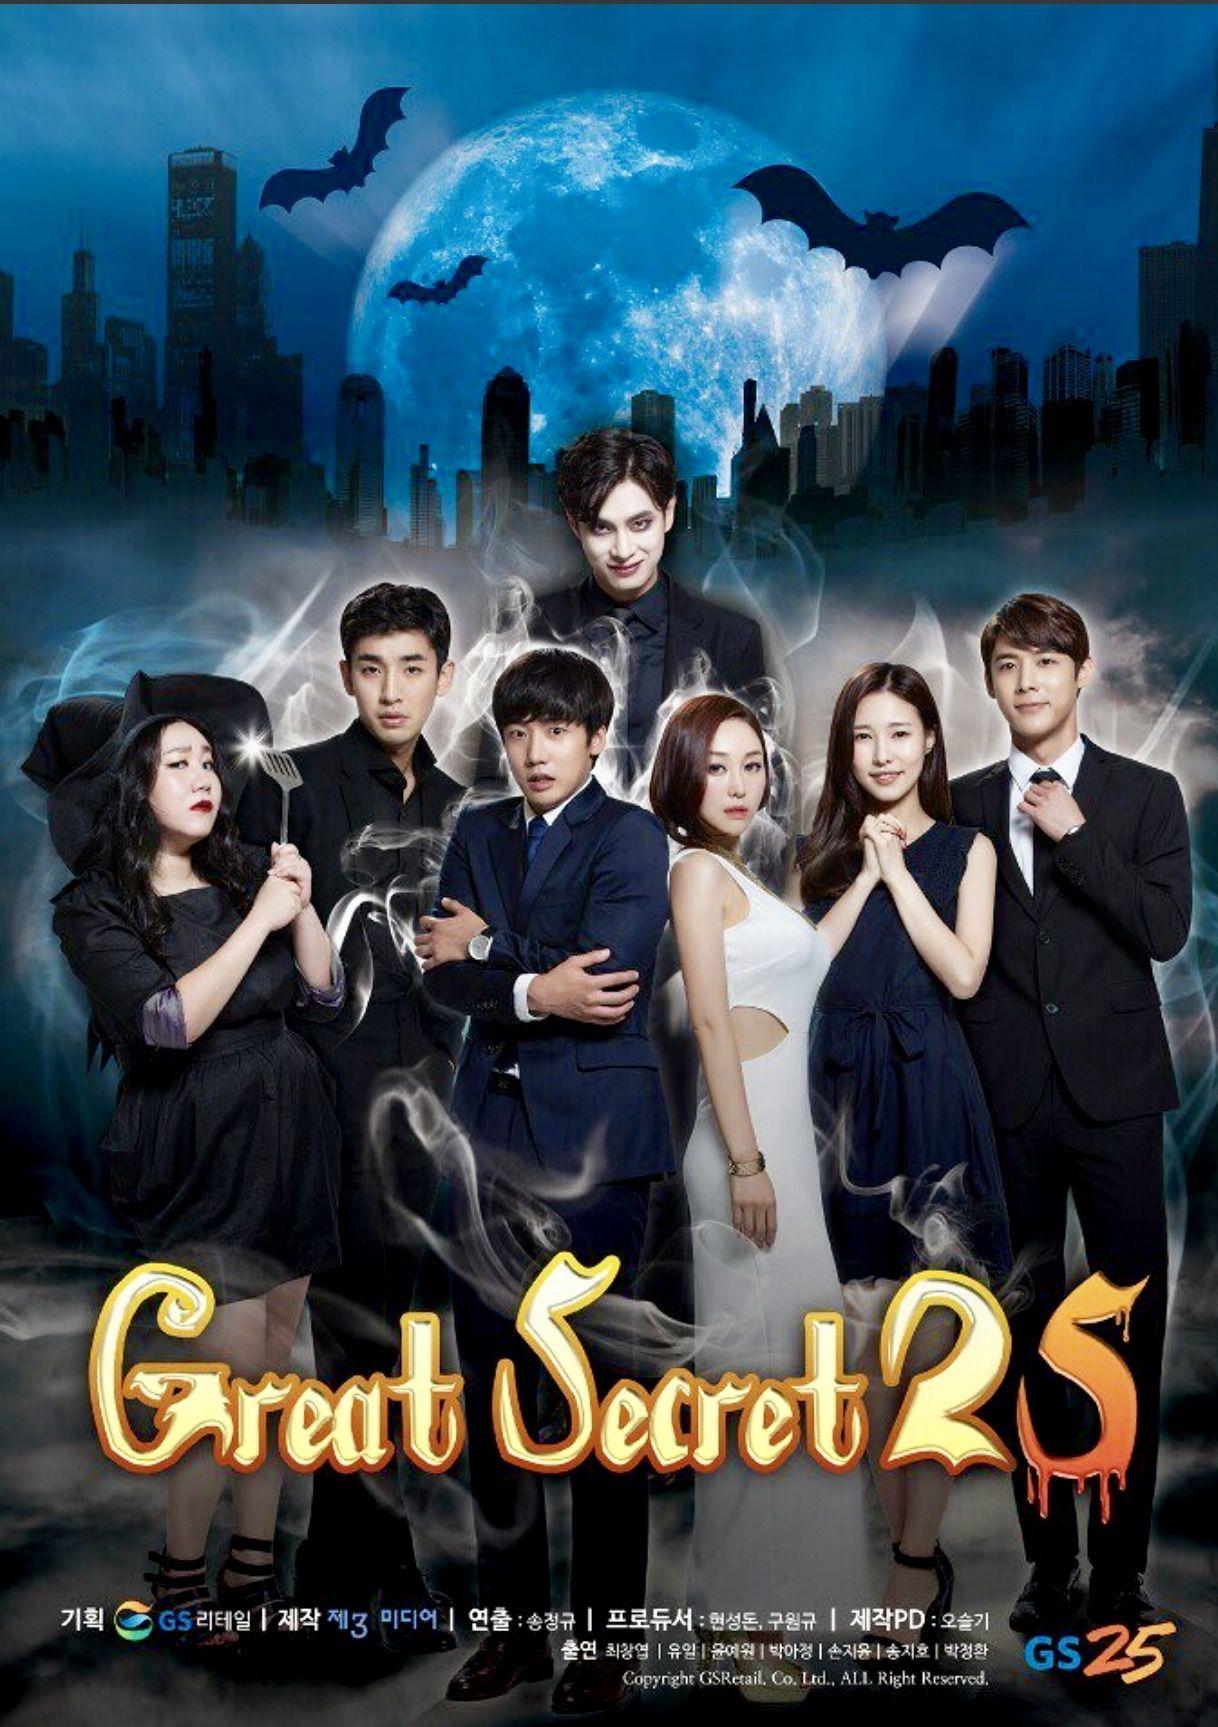 Great Secret 25. Kdrama. Drama movies, Drama korea, Drama